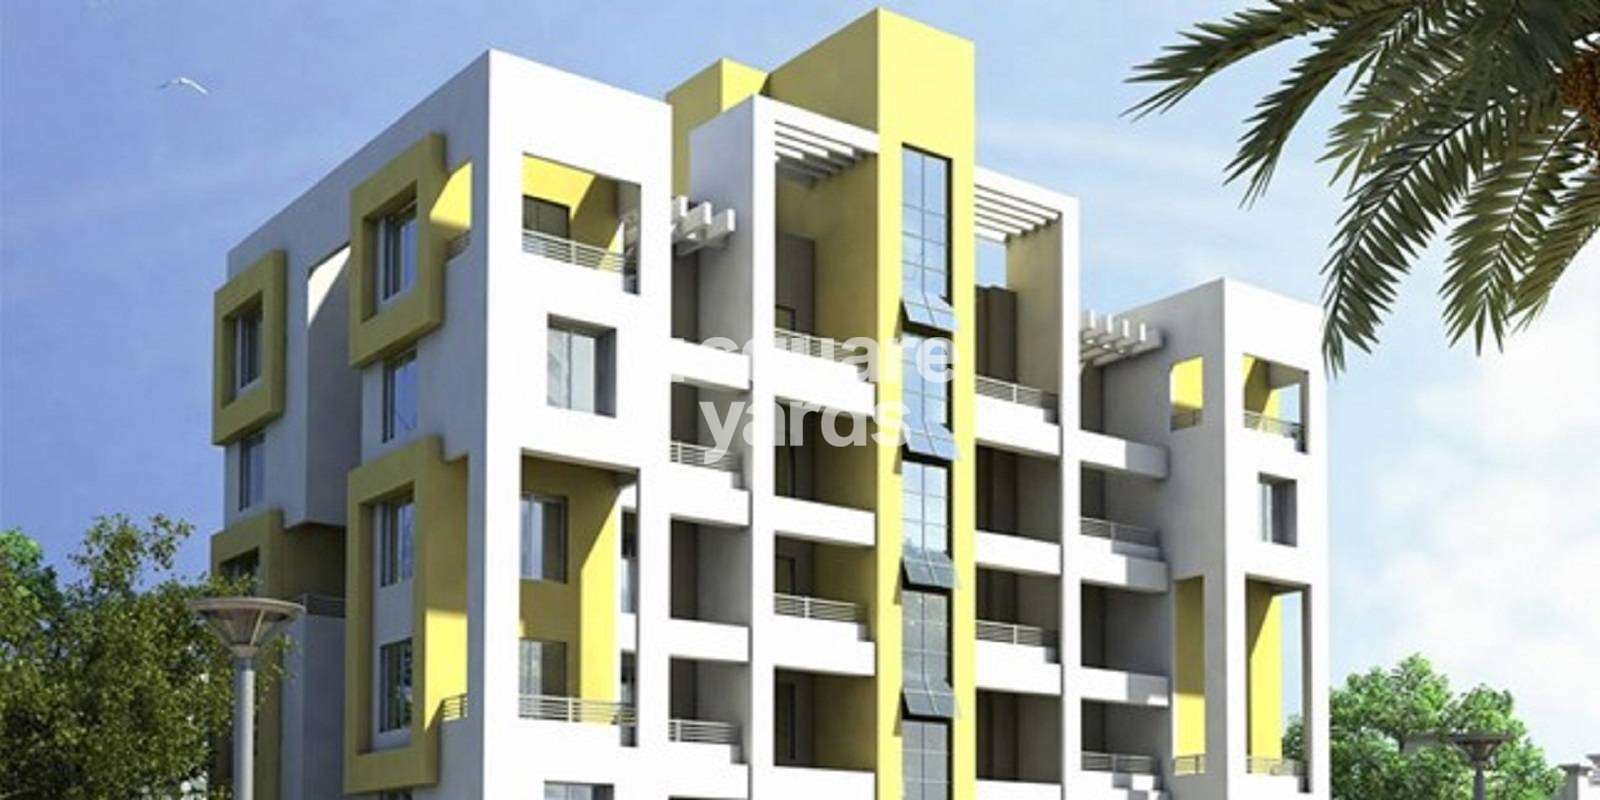 Ruturaj Apartments Cover Image